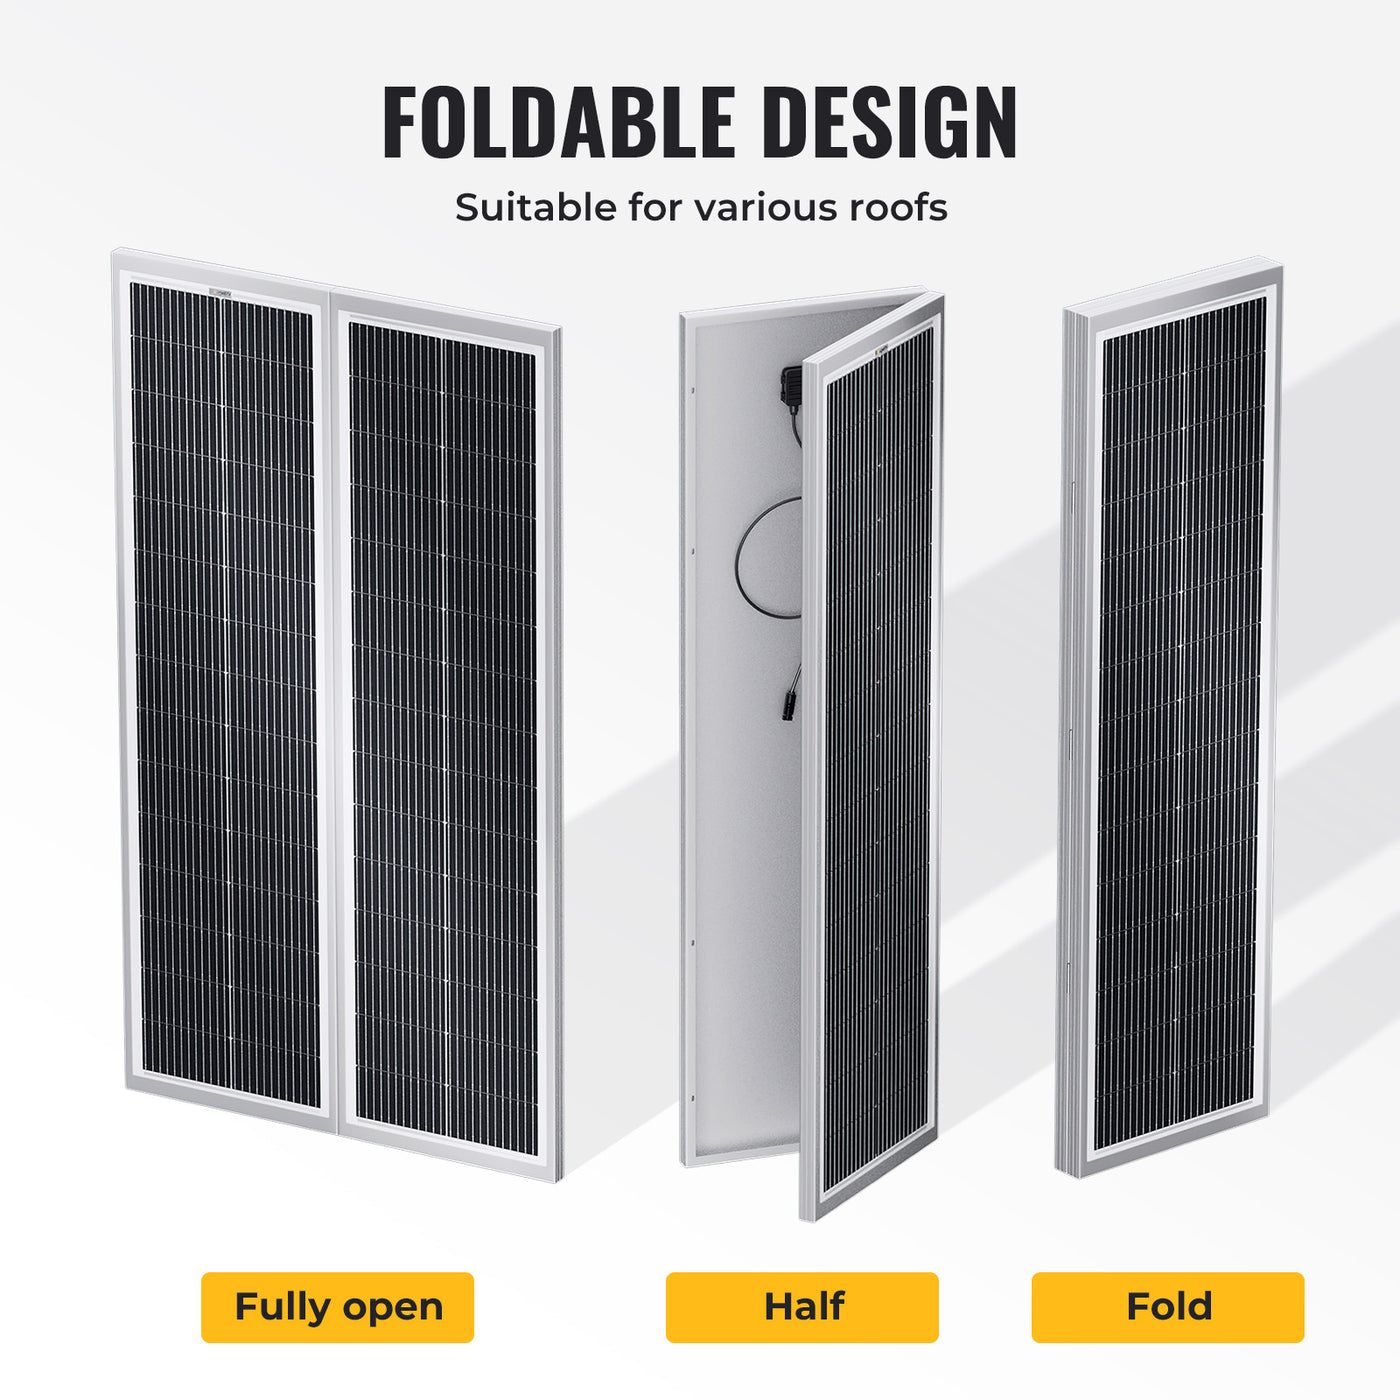 BougeRV 300 Watt 12BB Mono Foldable Solar Panel